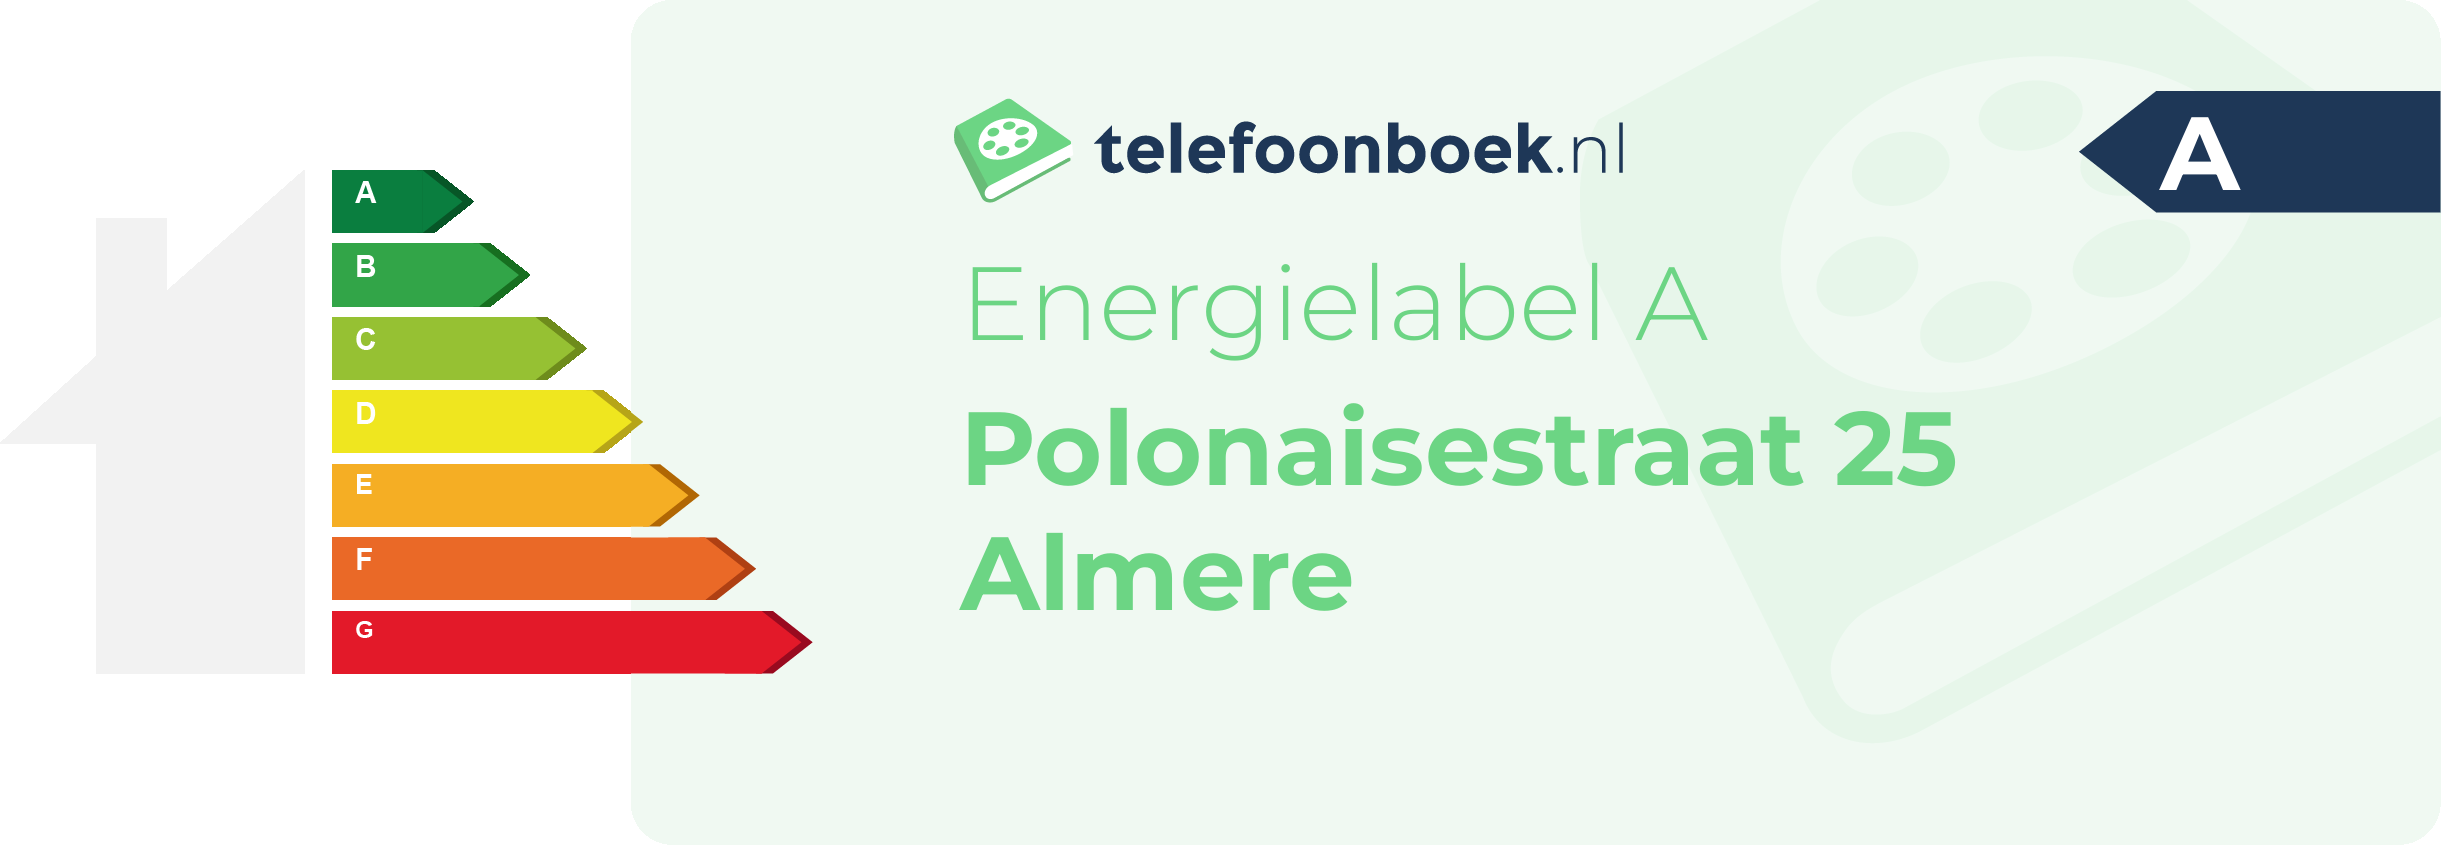 Energielabel Polonaisestraat 25 Almere